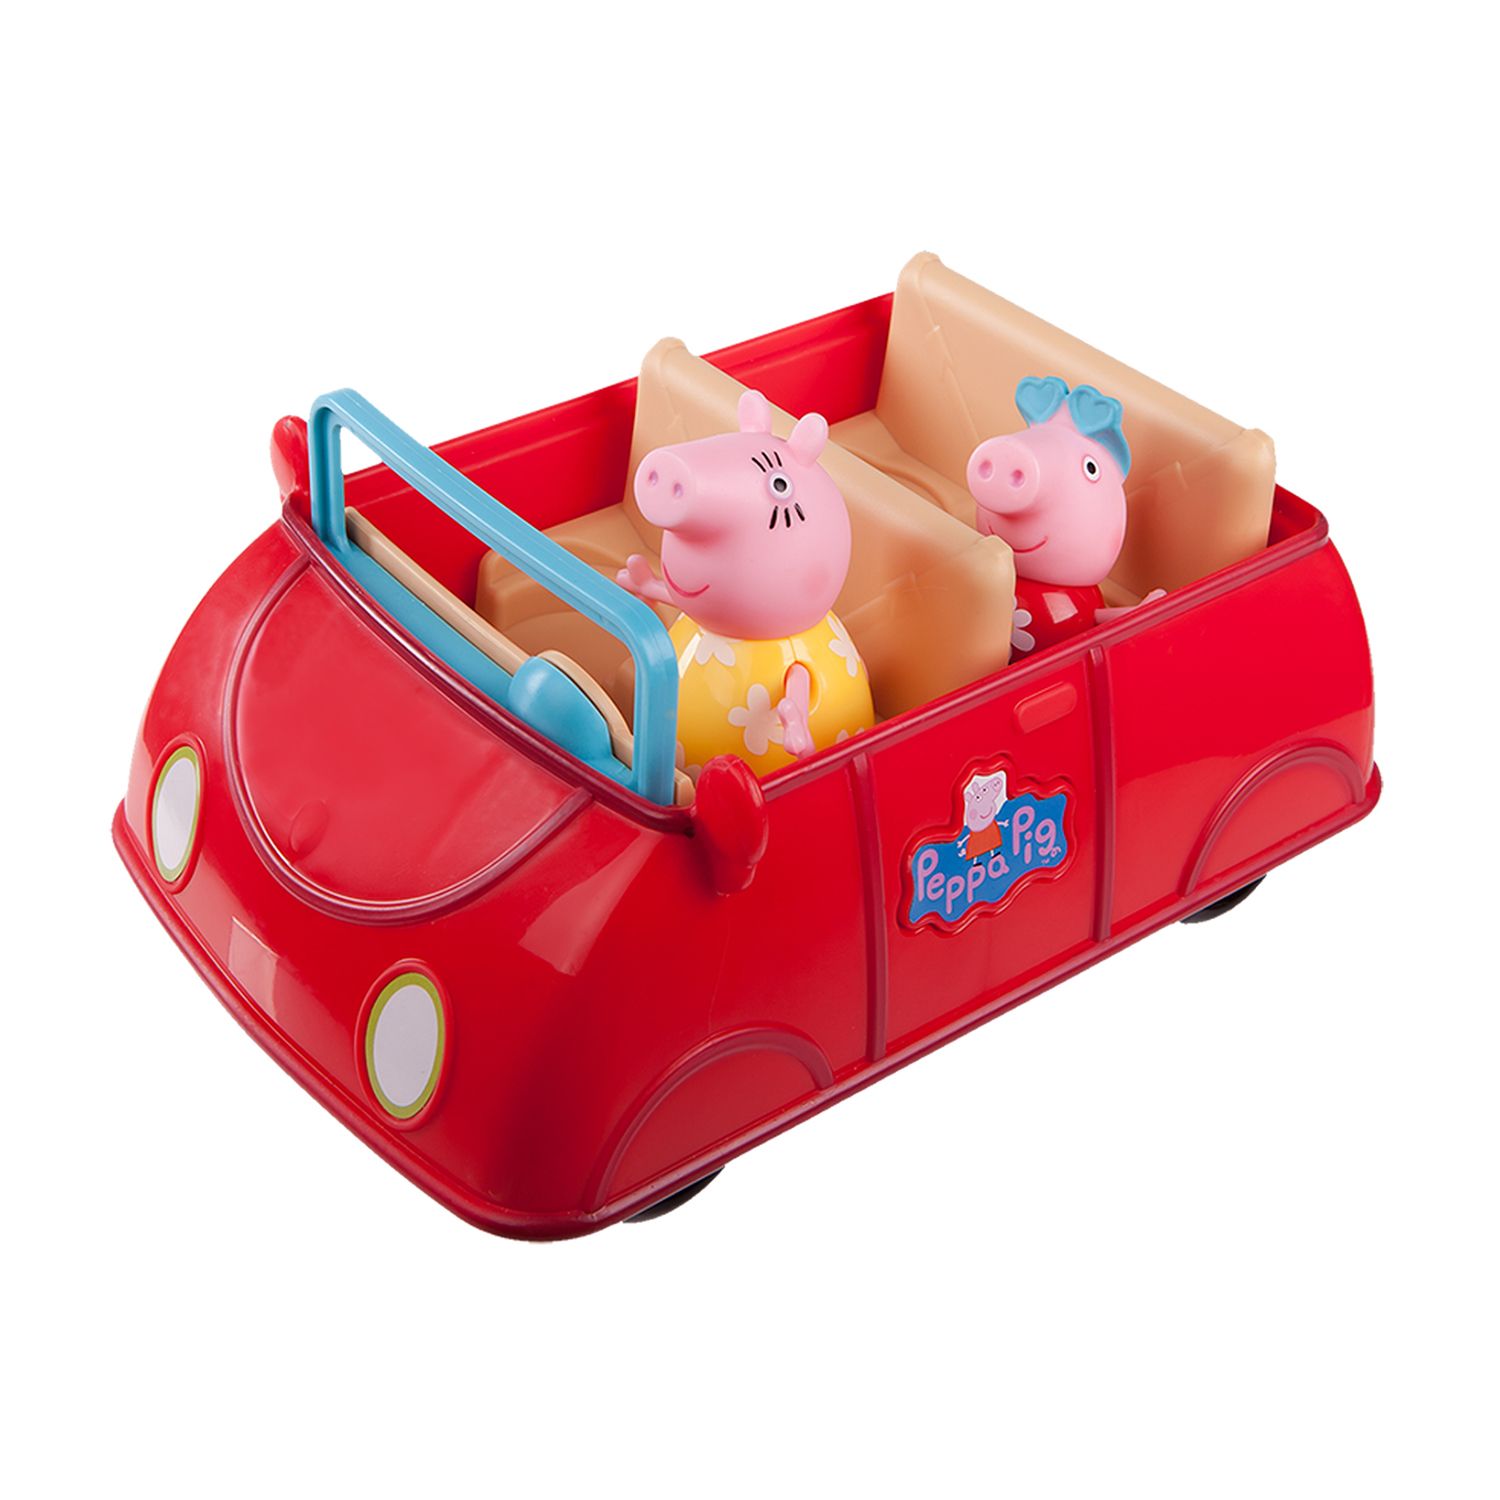 peppa pig red car toy